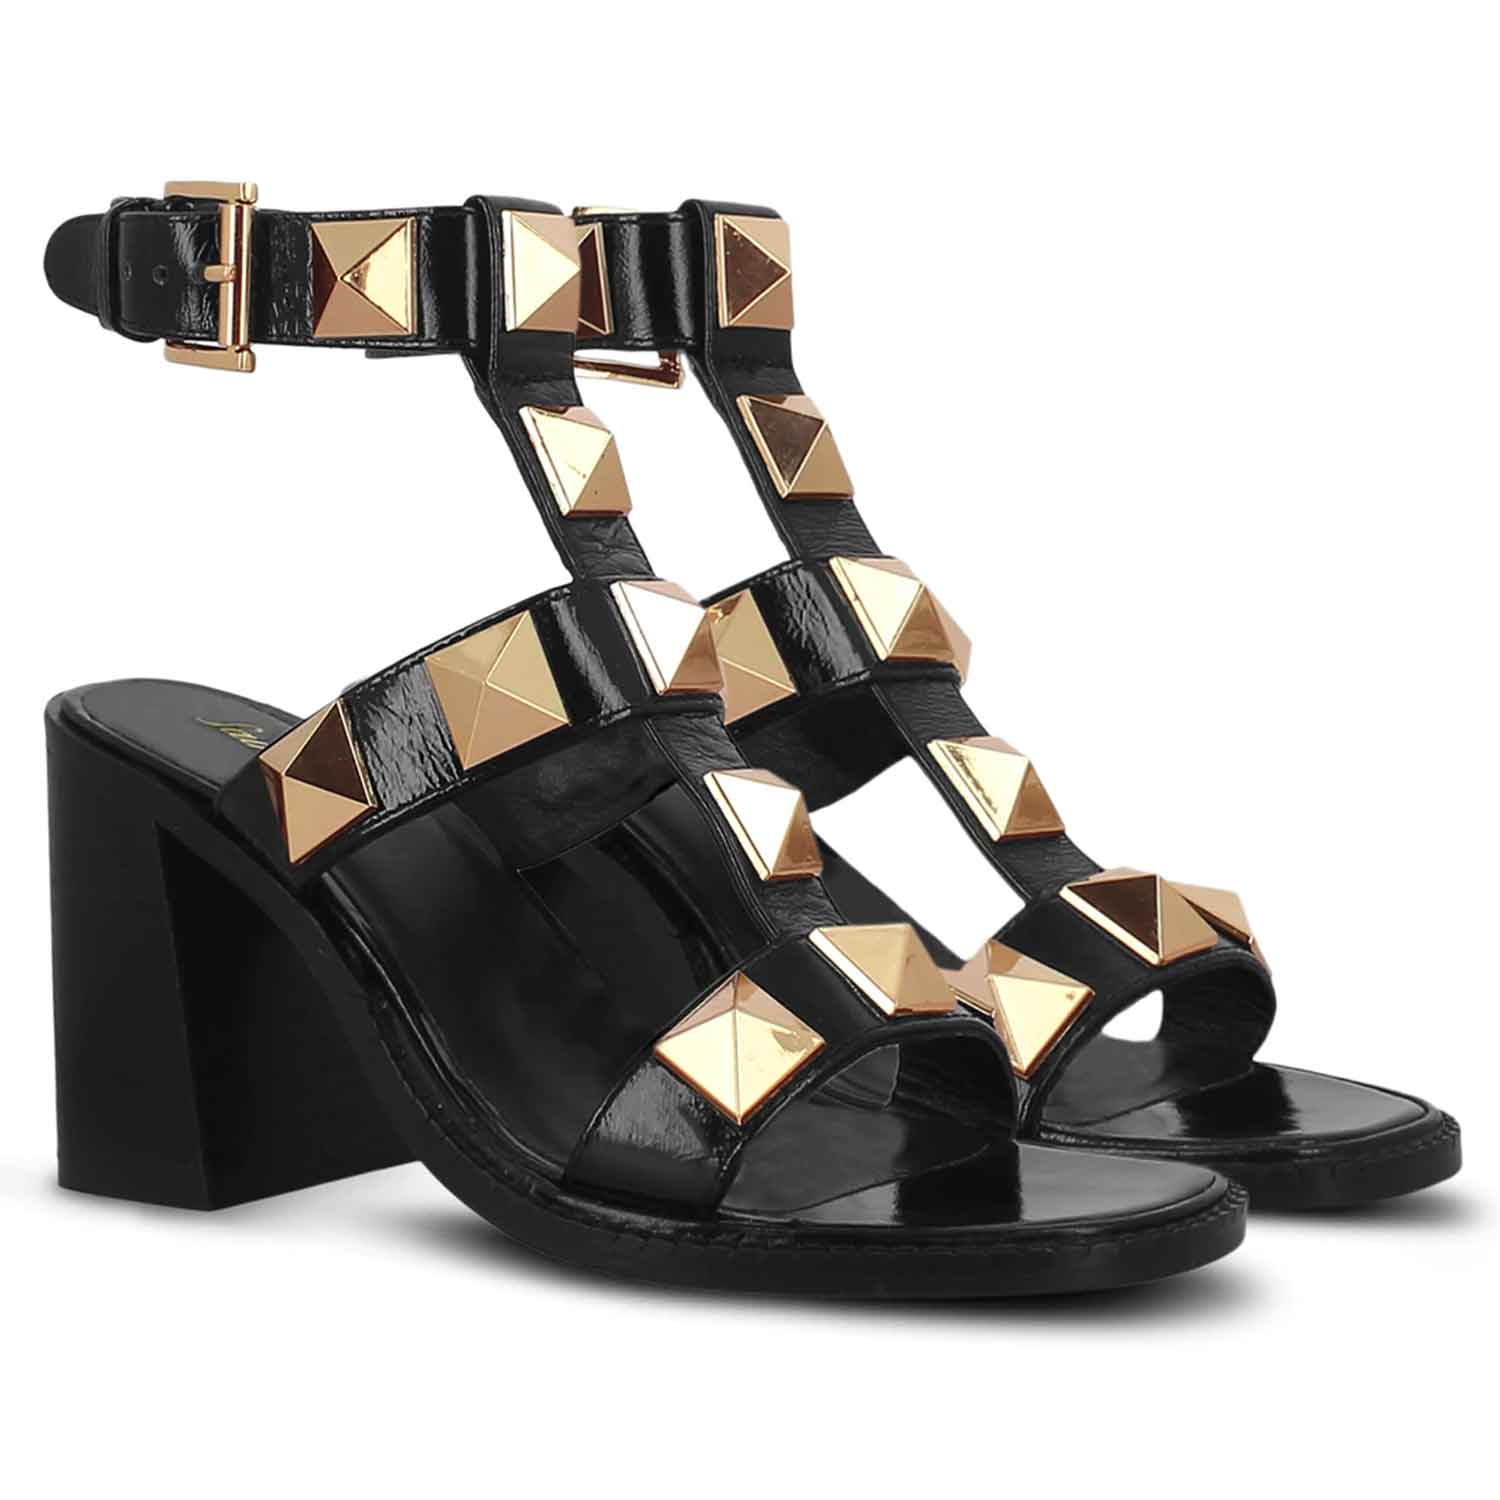 Buy SaintG Womens Aqua Leather Metal Studded Block Heels at Amazon.in